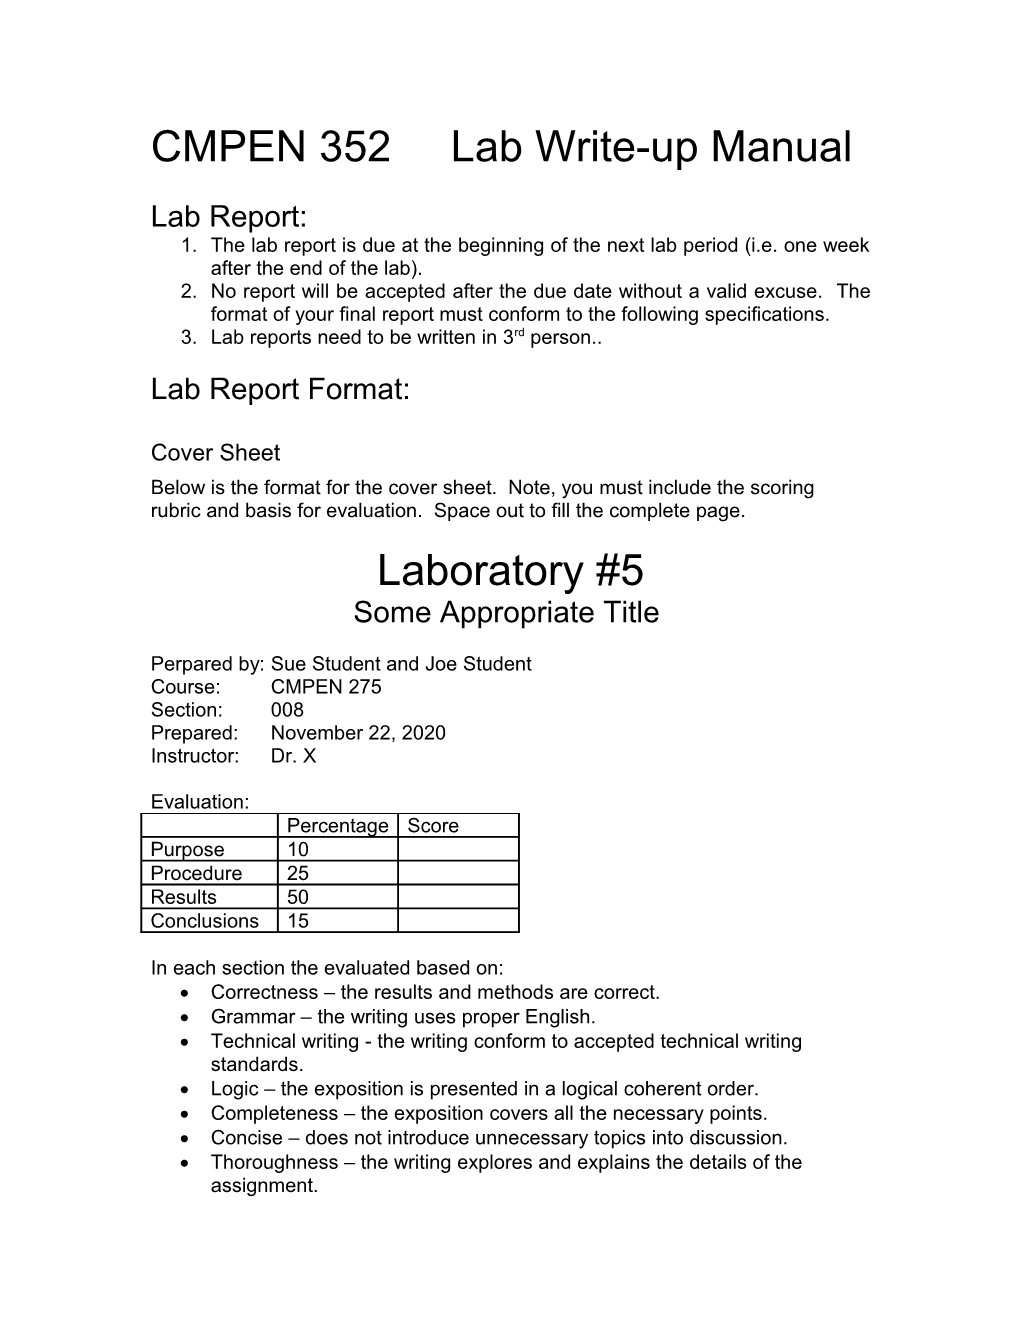 CMPEN 352Lab Write-Up Manual